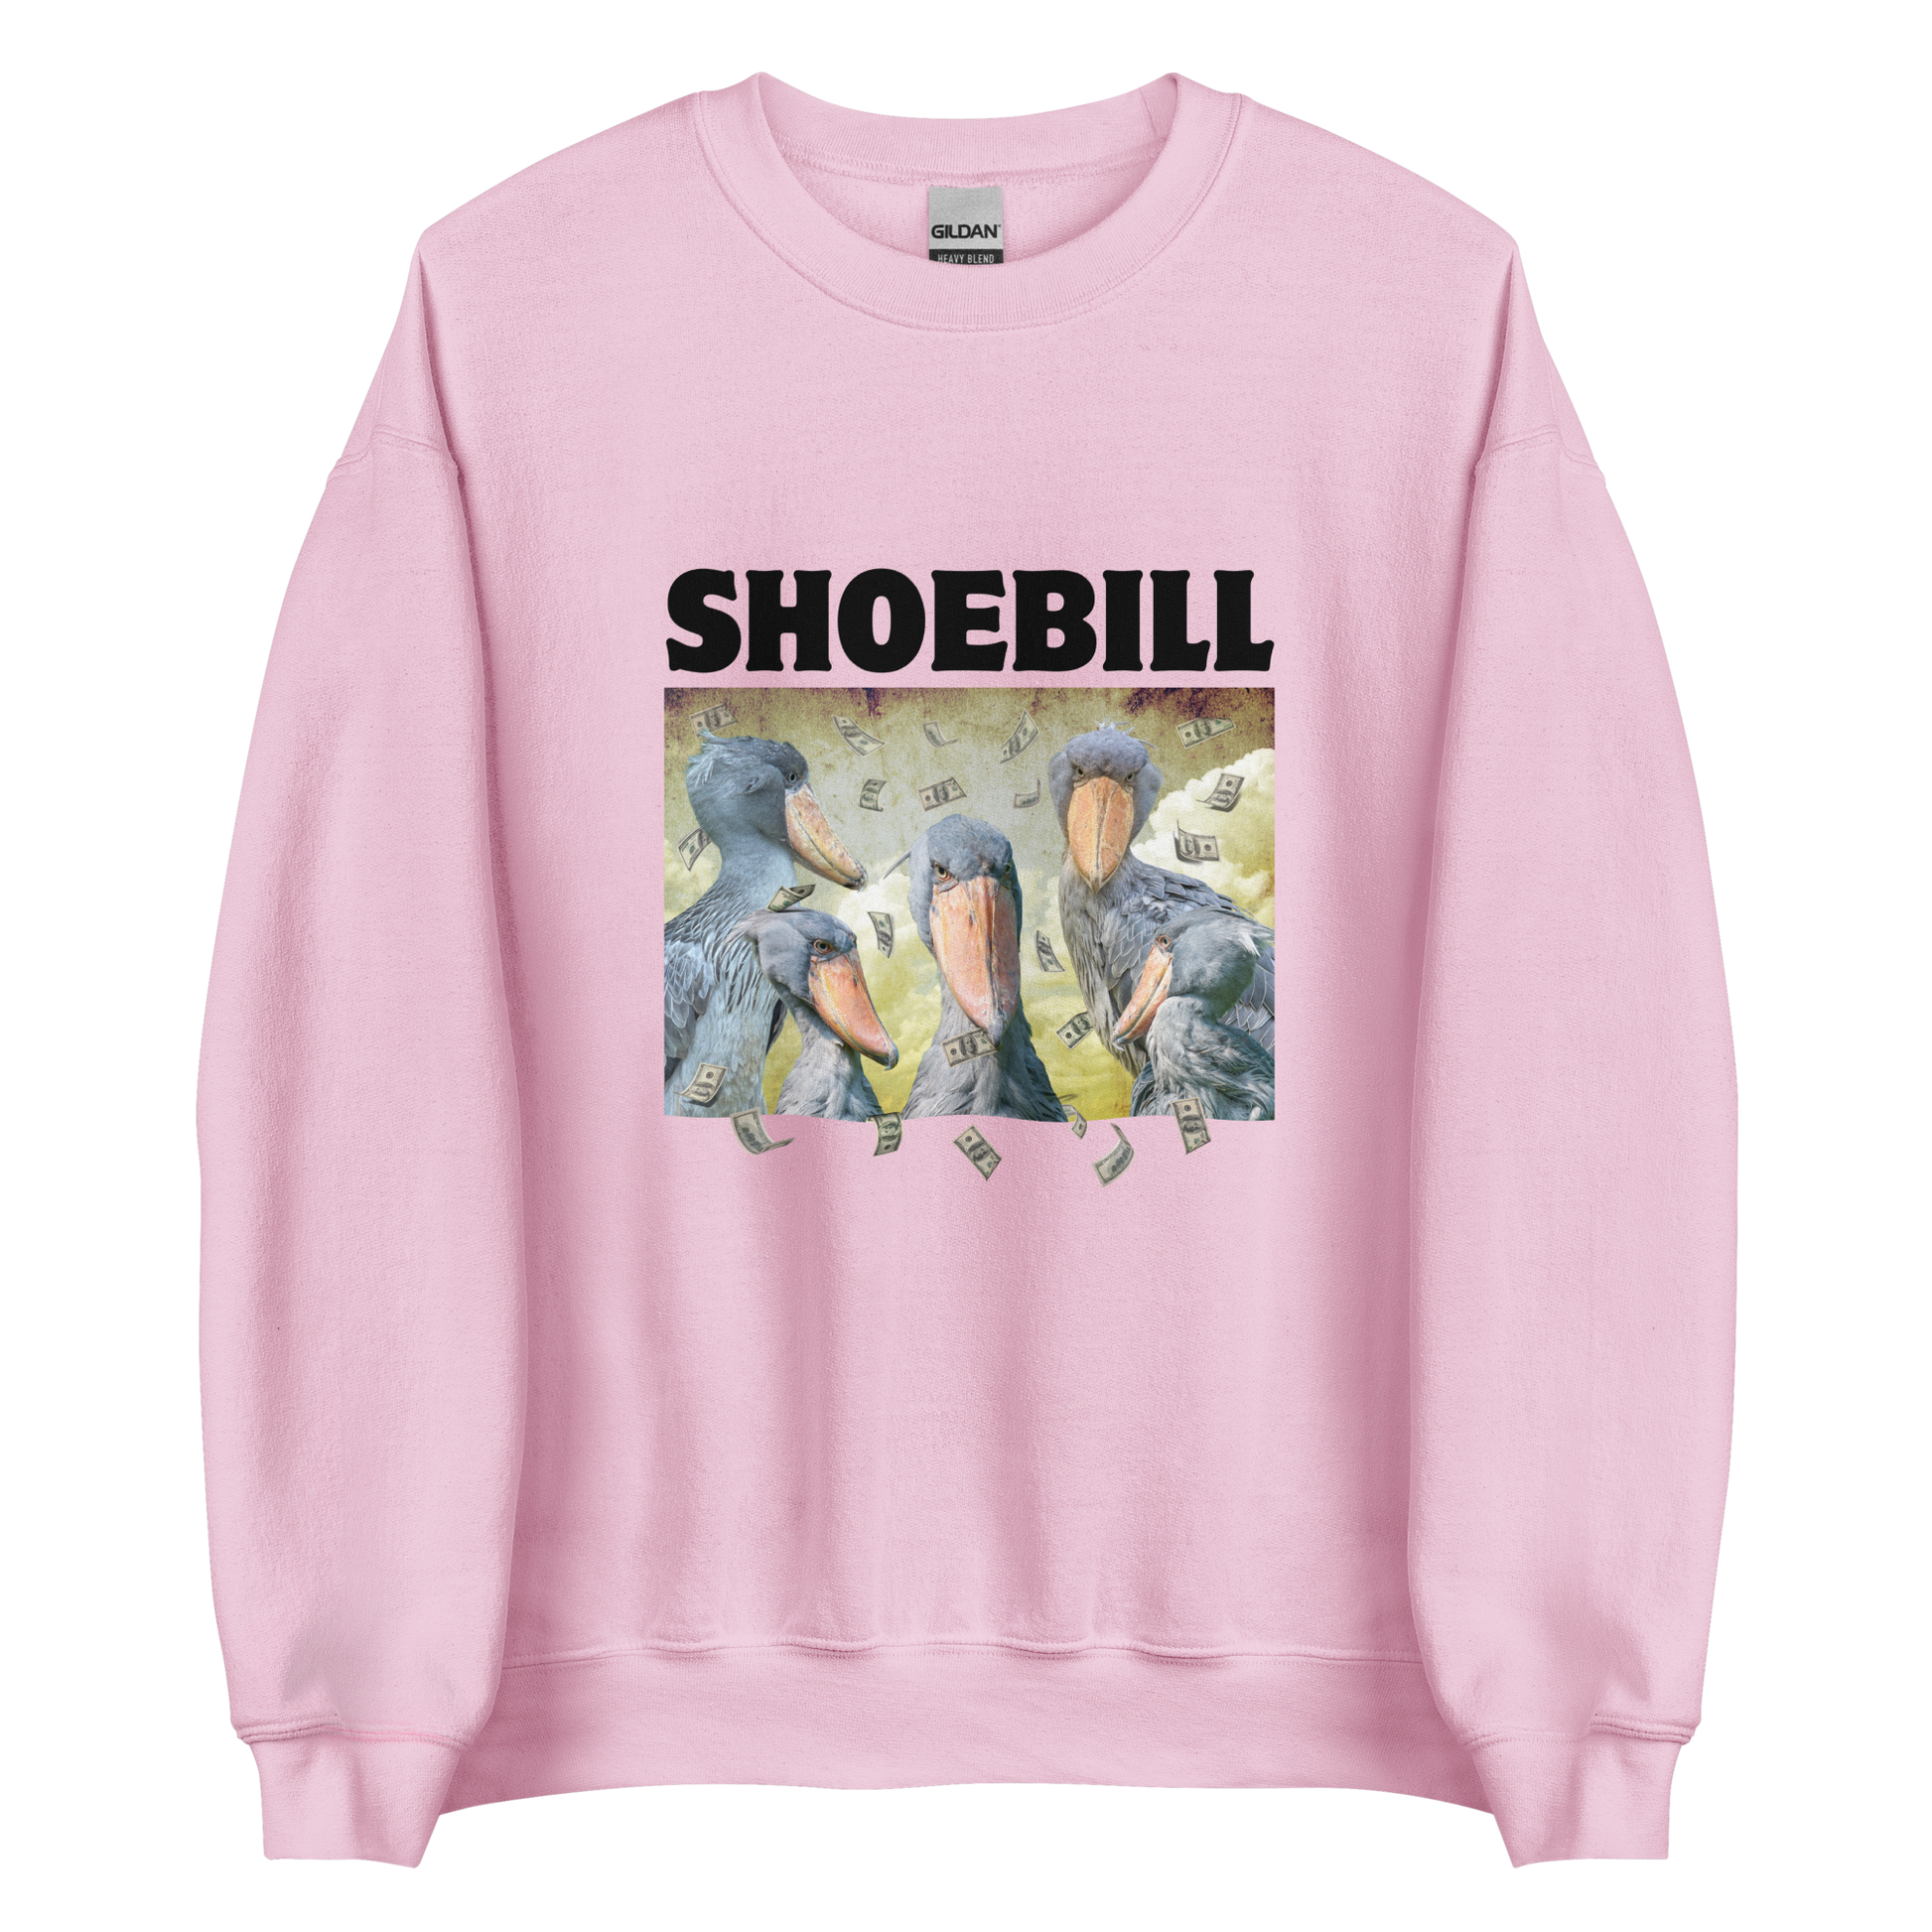 Light Pink Shoebill Sweatshirt featuring a cool Shoebill graphic on the chest - Artsy/Funny Graphic Shoebill Stork Sweatshirts - Boozy Fox